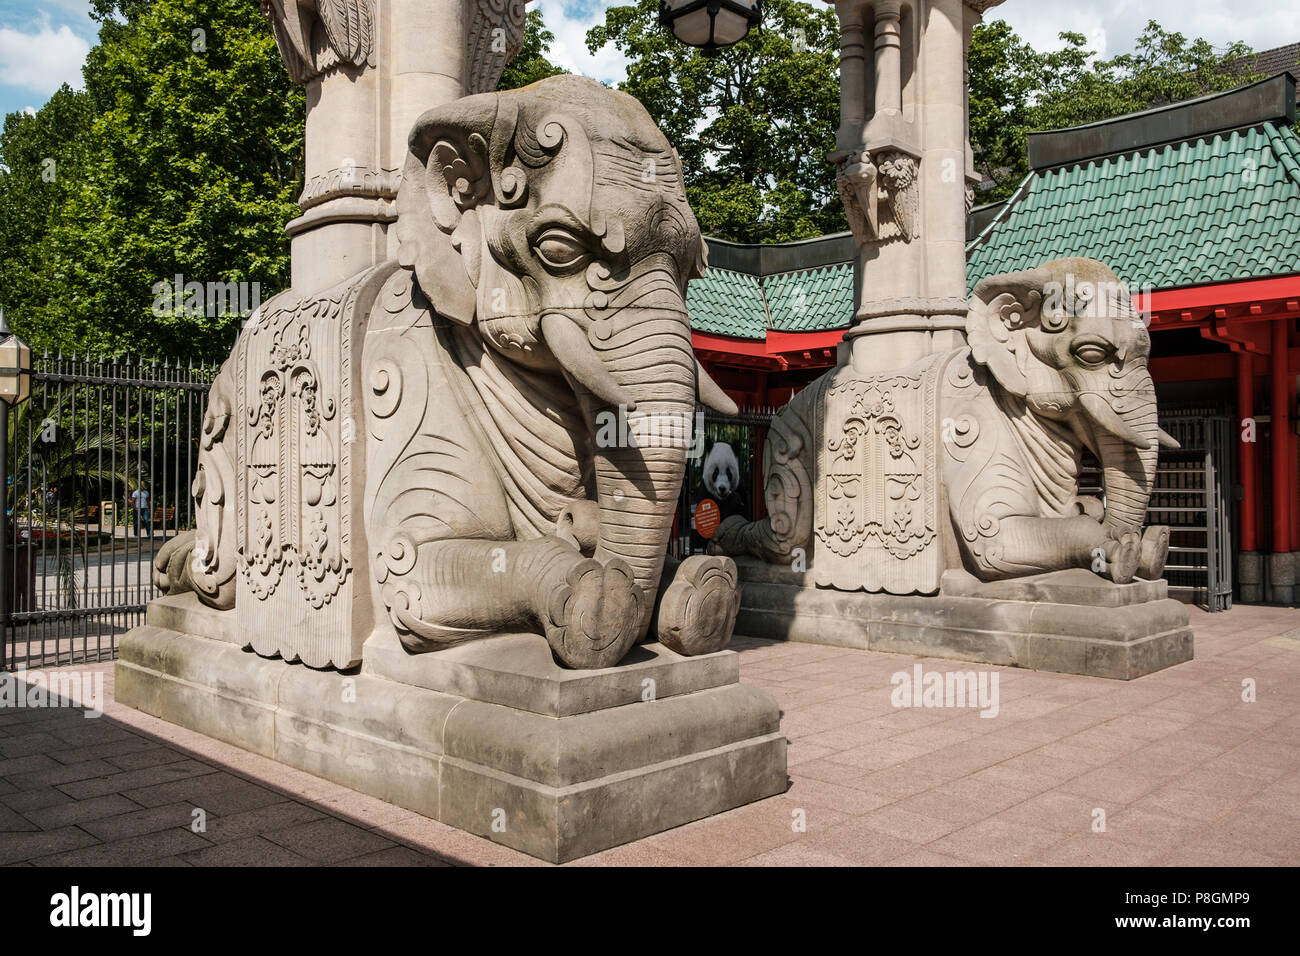 Berlin, Deutschland - Juli 2018: Das Eingangstor (Elefant Tor) Der Berliner Zoo/Tierpark in Berlin, Deutschland Stockfoto